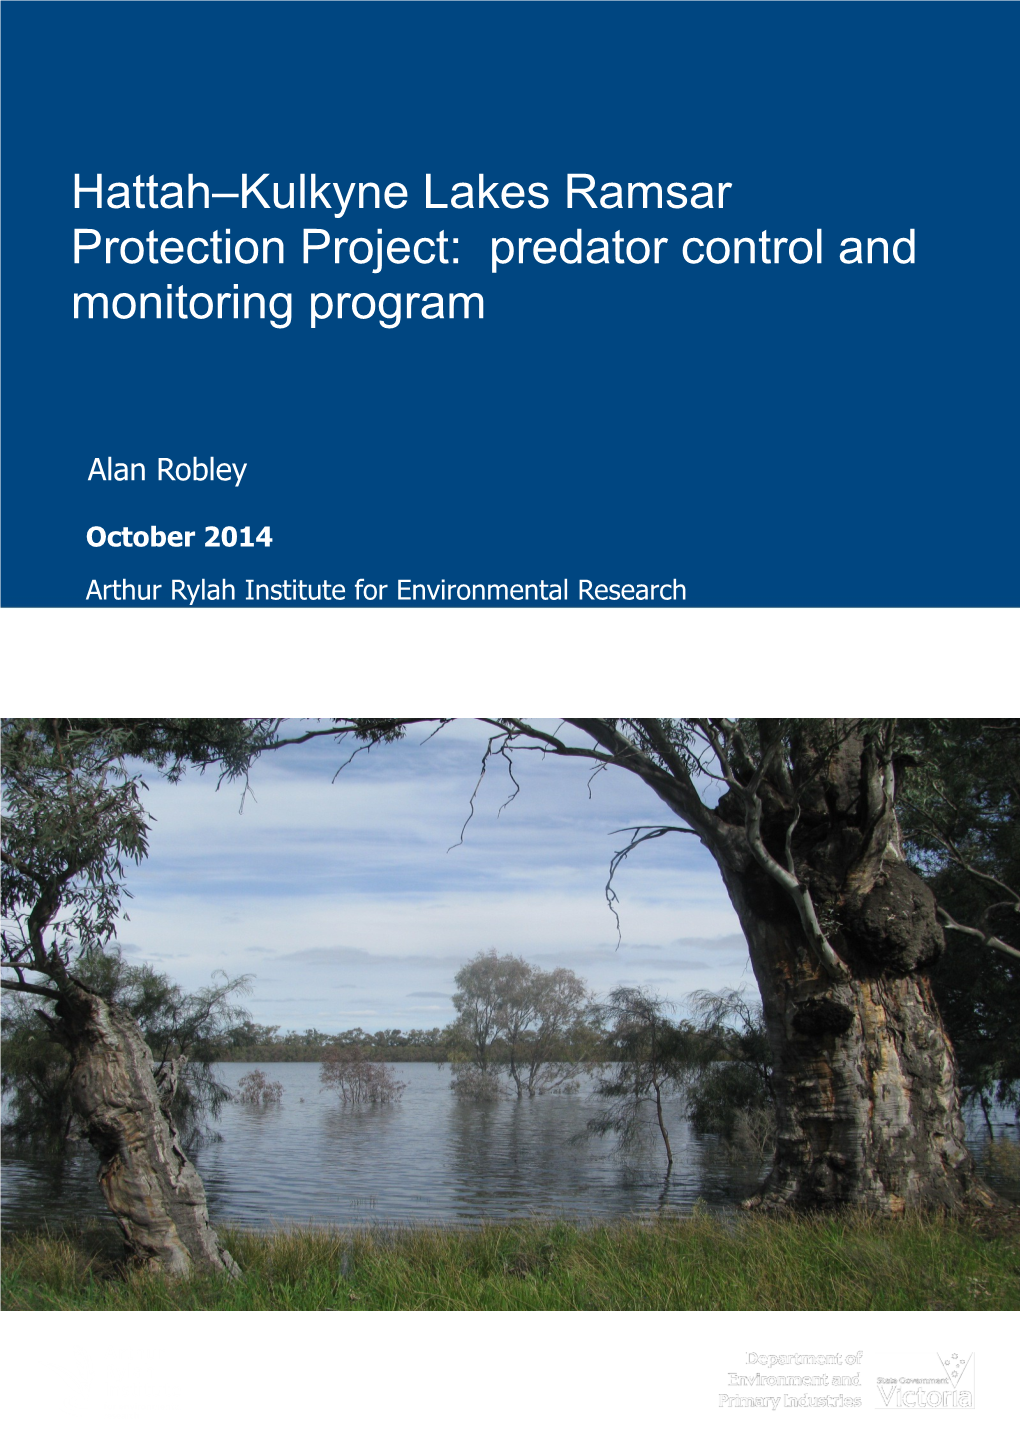 Hattah Kulkyne Lakes Ramsar Protection Project:Predator Control and Monitoring Program